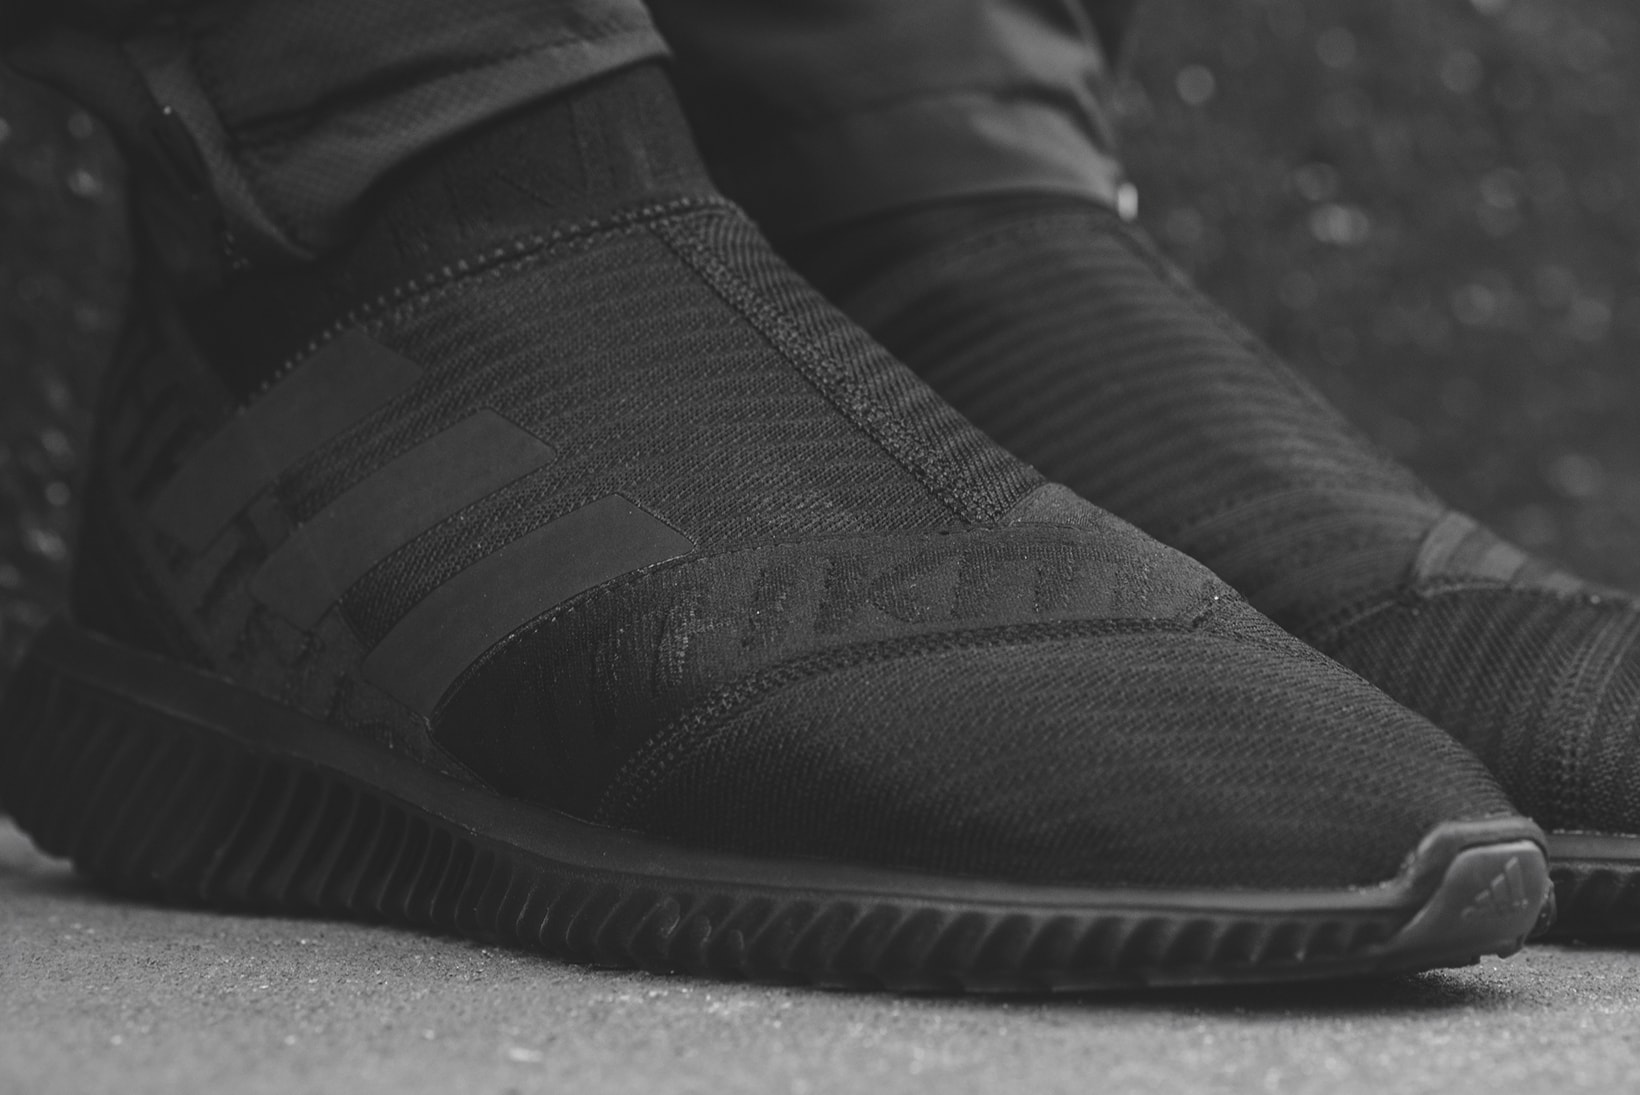 KITH adidas Nemeziz Tango 17 UltraBOOST Closer Look Footwear Black Soccer Release Date Info Drops November 3 2017